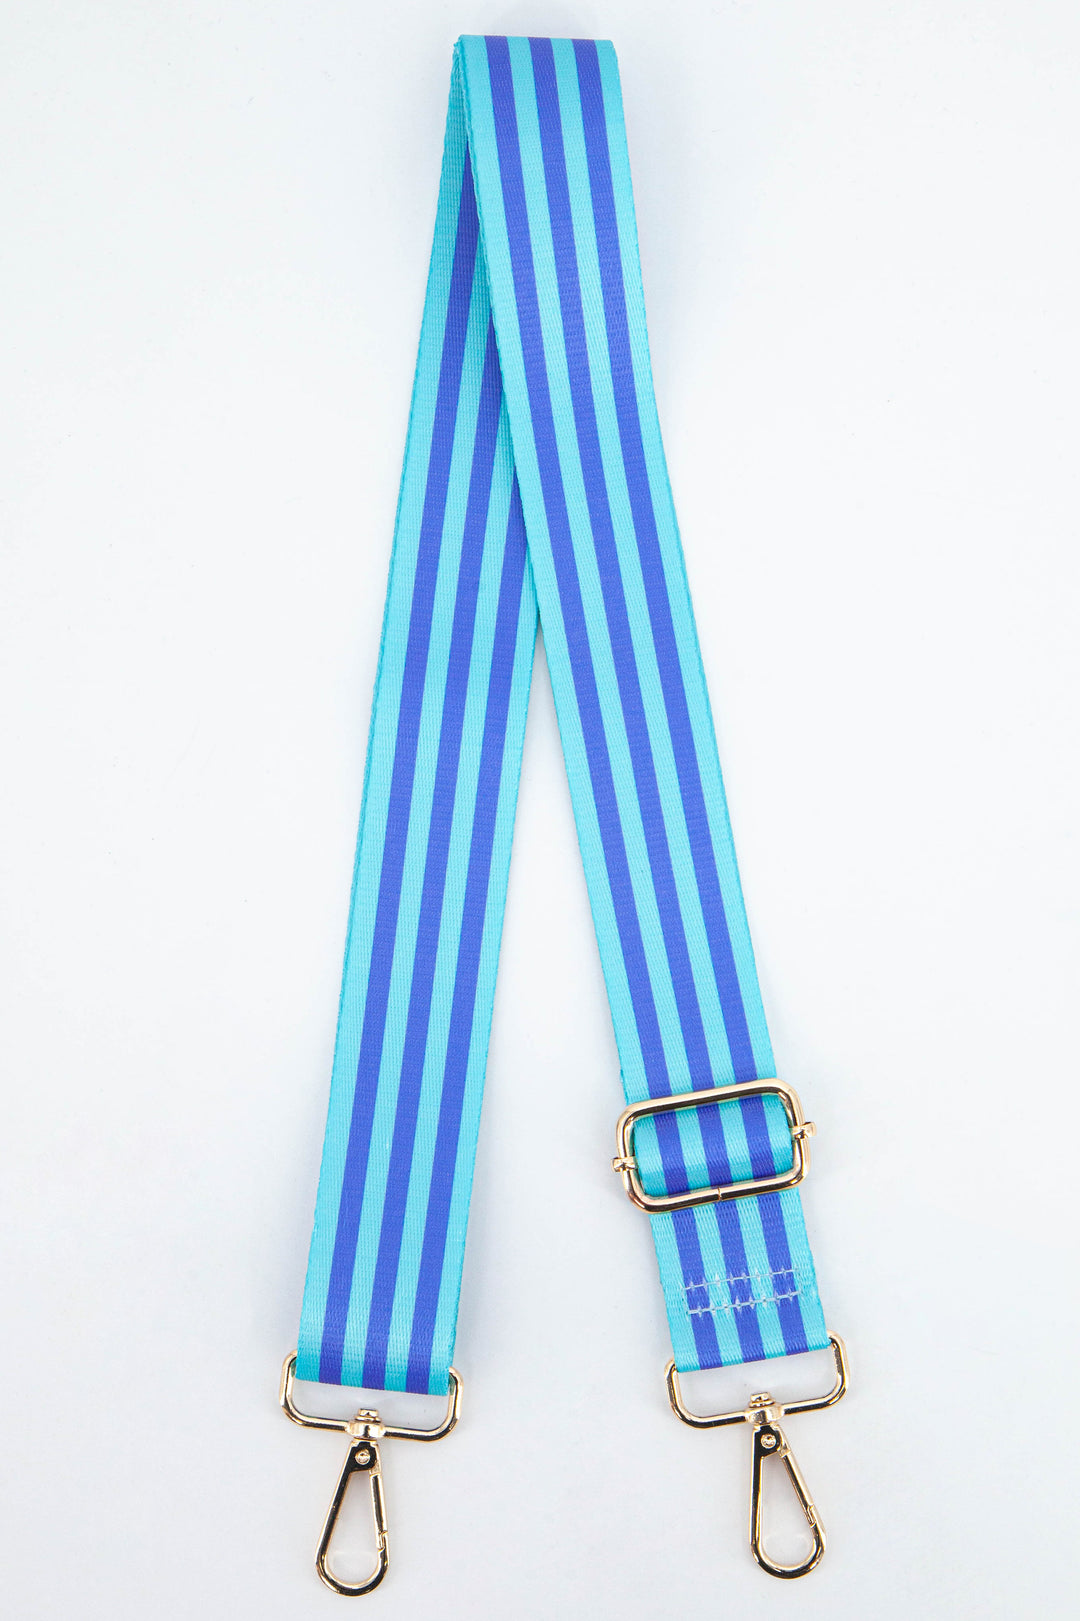 aqua blue and royal blue alternating stripe bag strap with gold clip on hardware